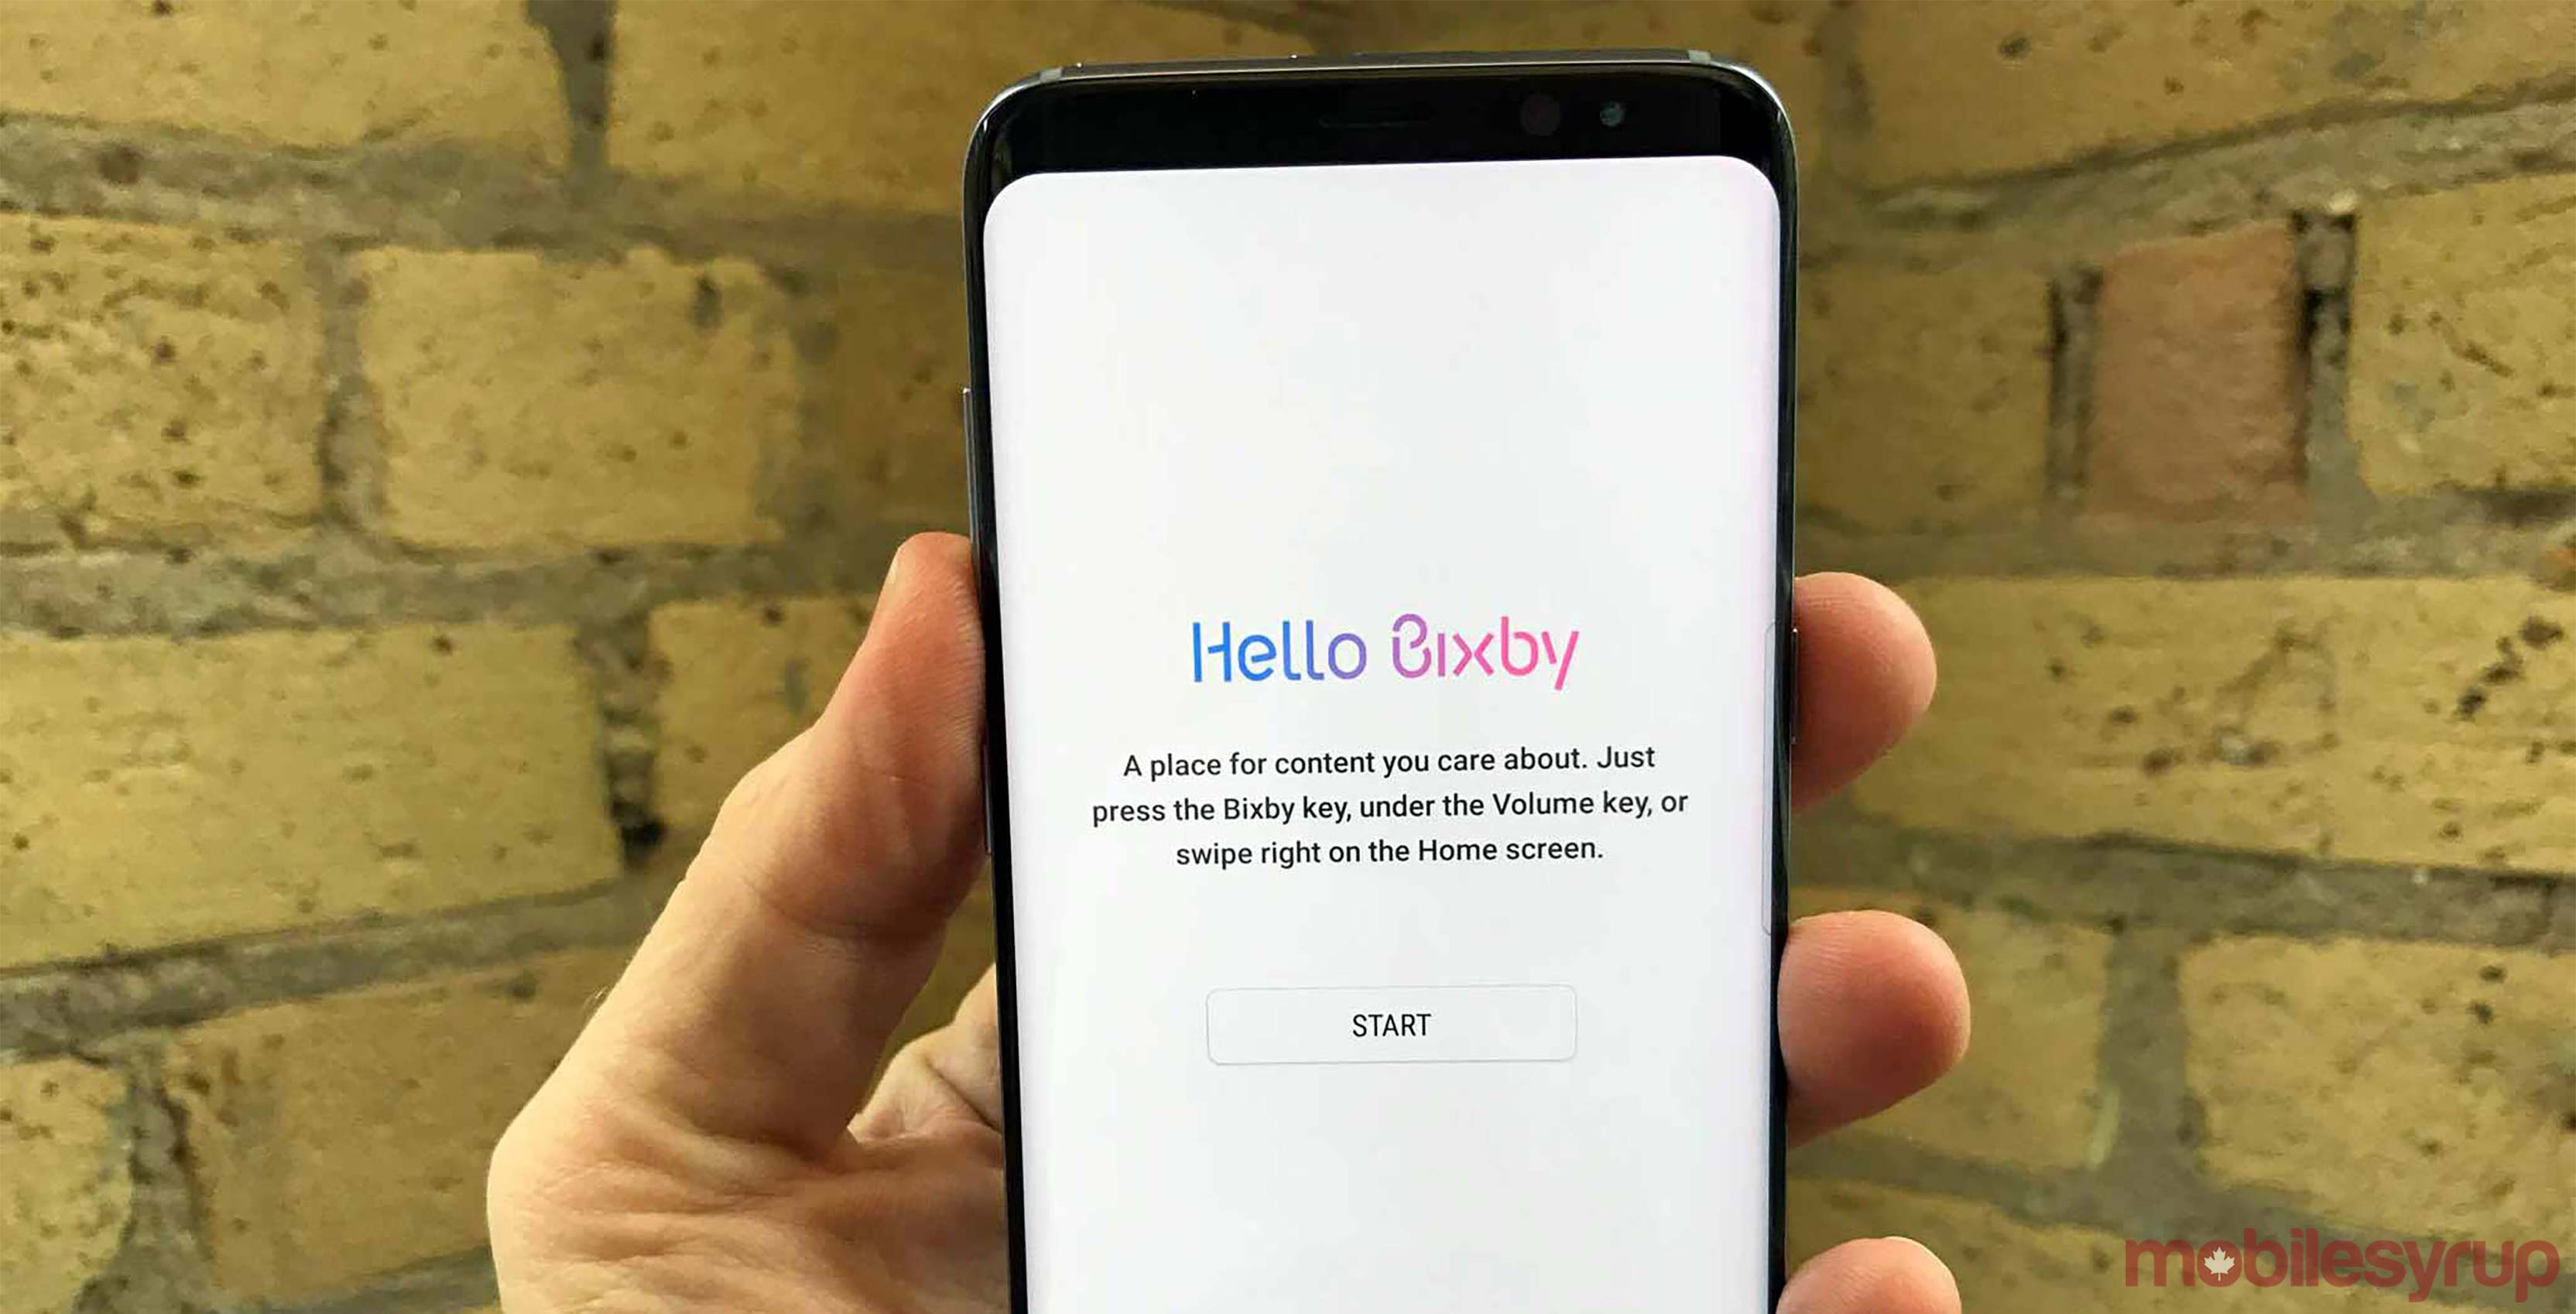 Bixby on phone in hand